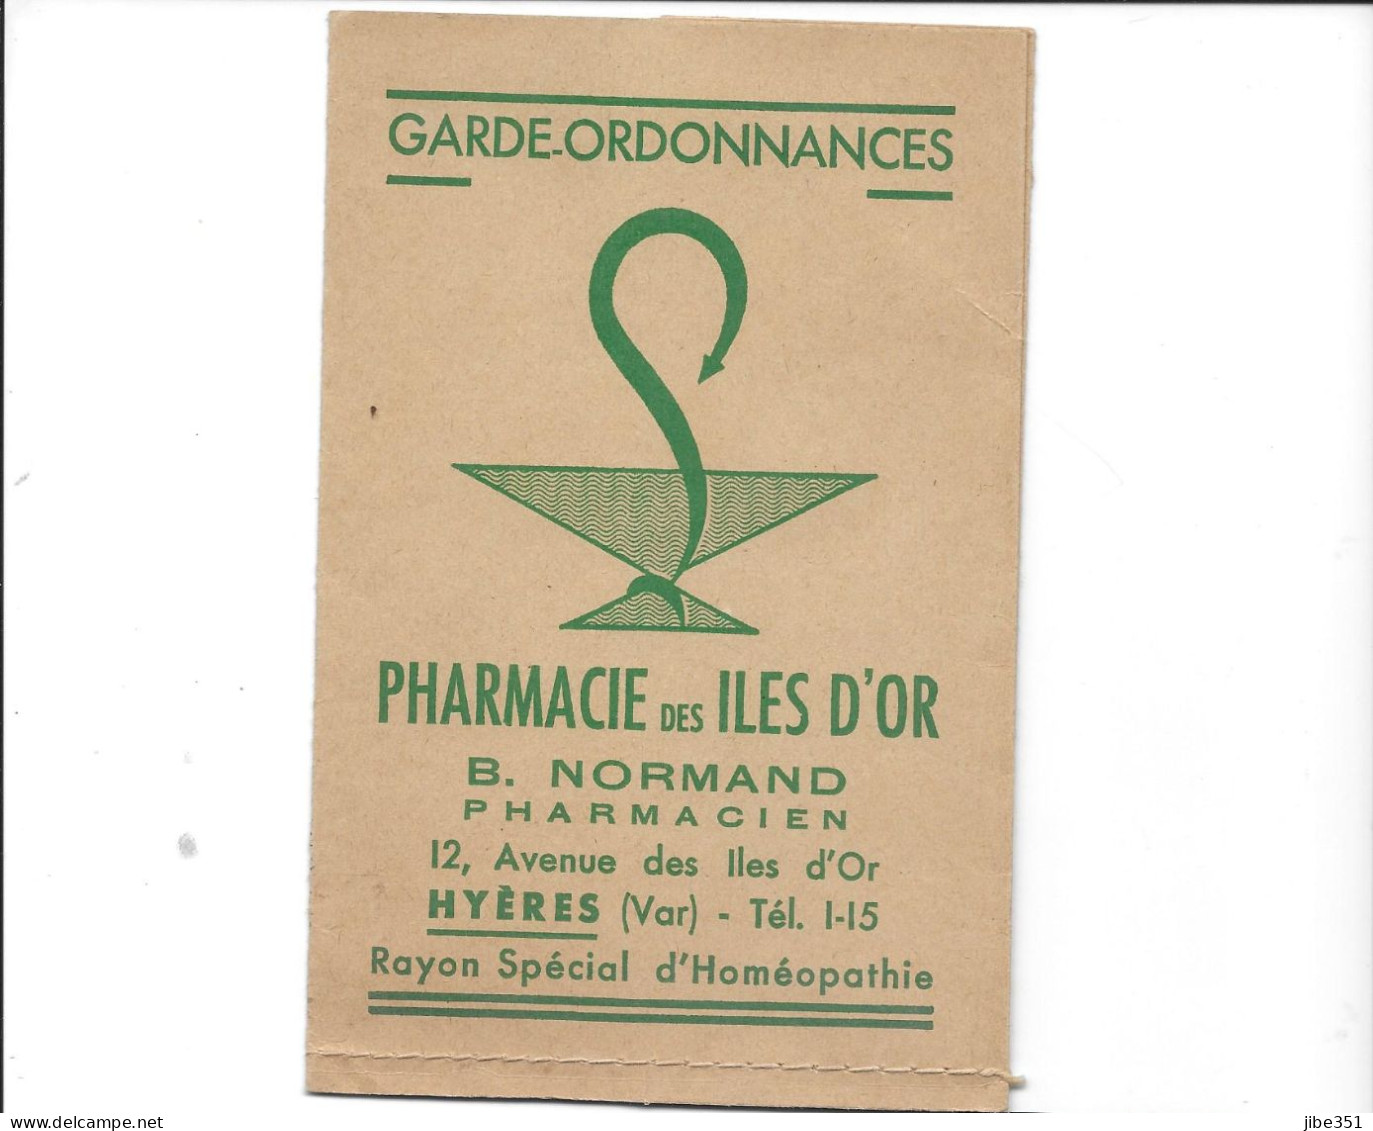 Garde Ordonnances  Pharmacie Des Iles D'or Hyères - Advertising